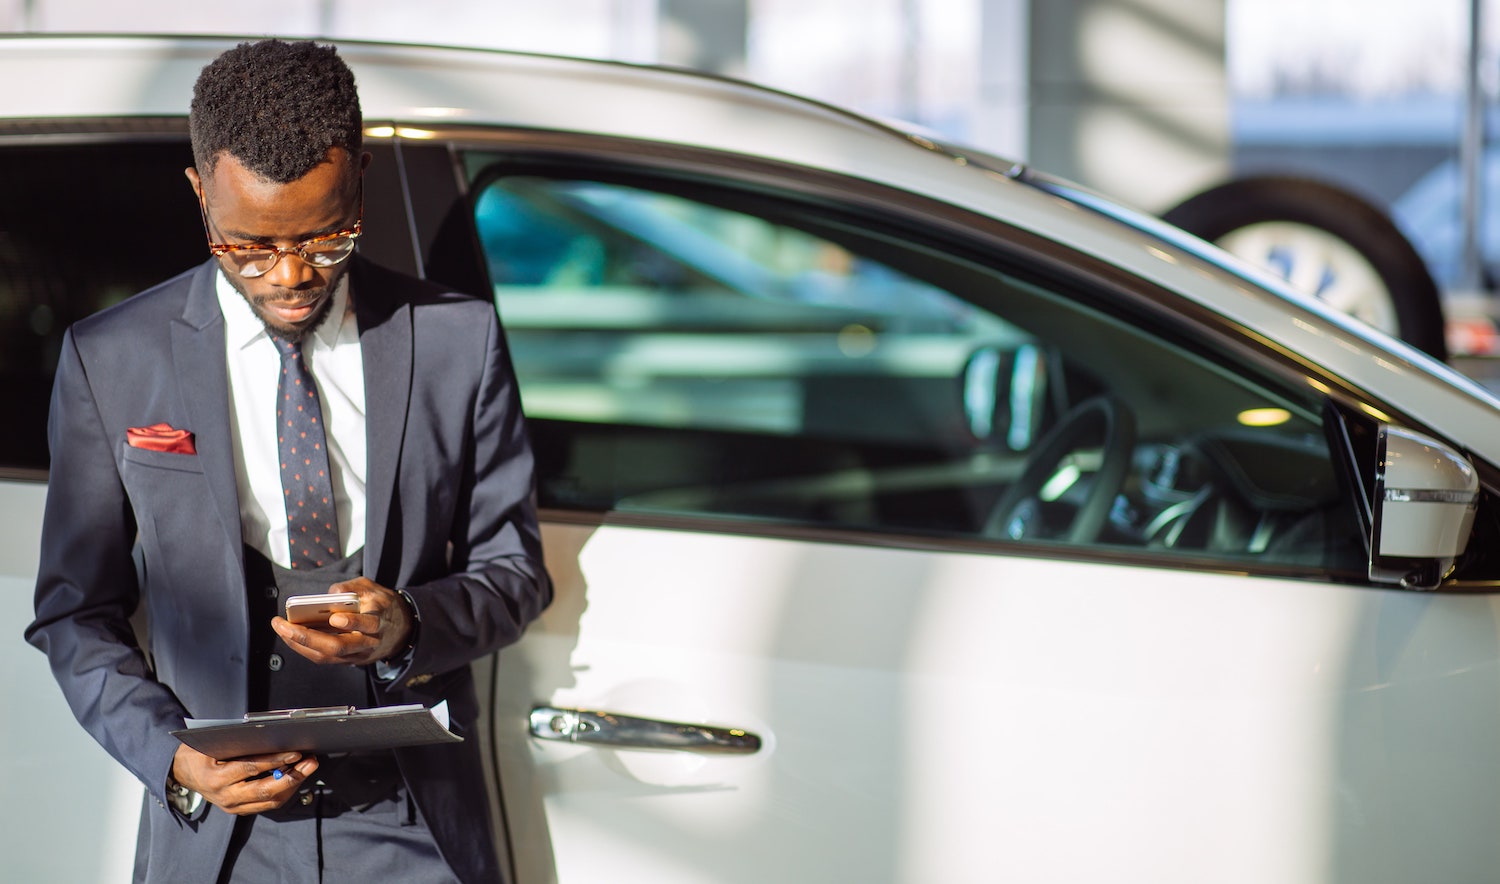 car salesman using mobile device _ car rental software